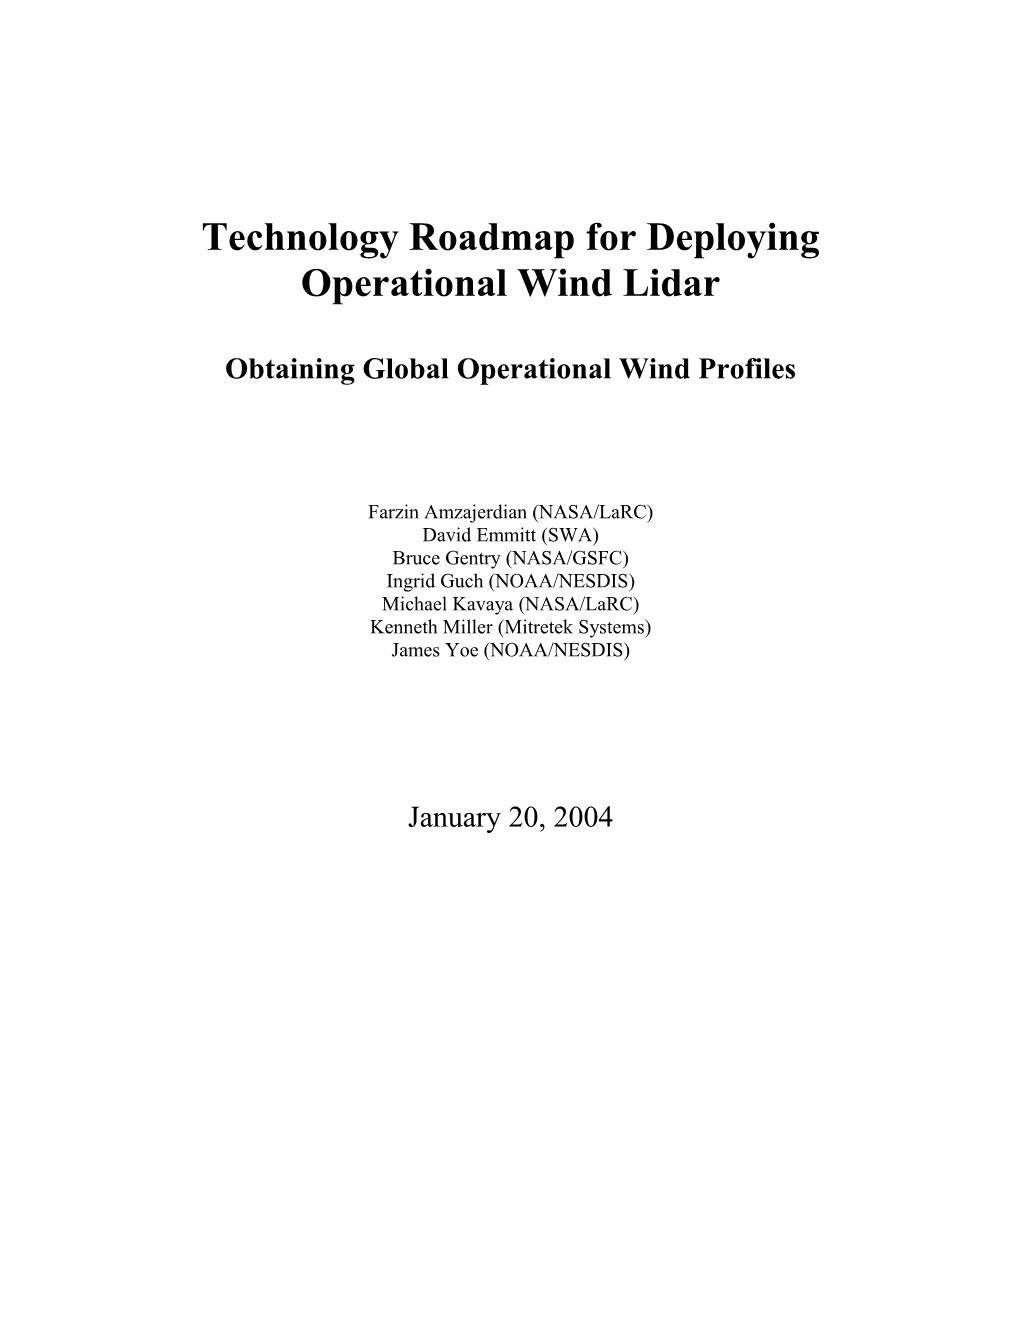 Technology Roadmap for Deploying Operational Wind Lidar